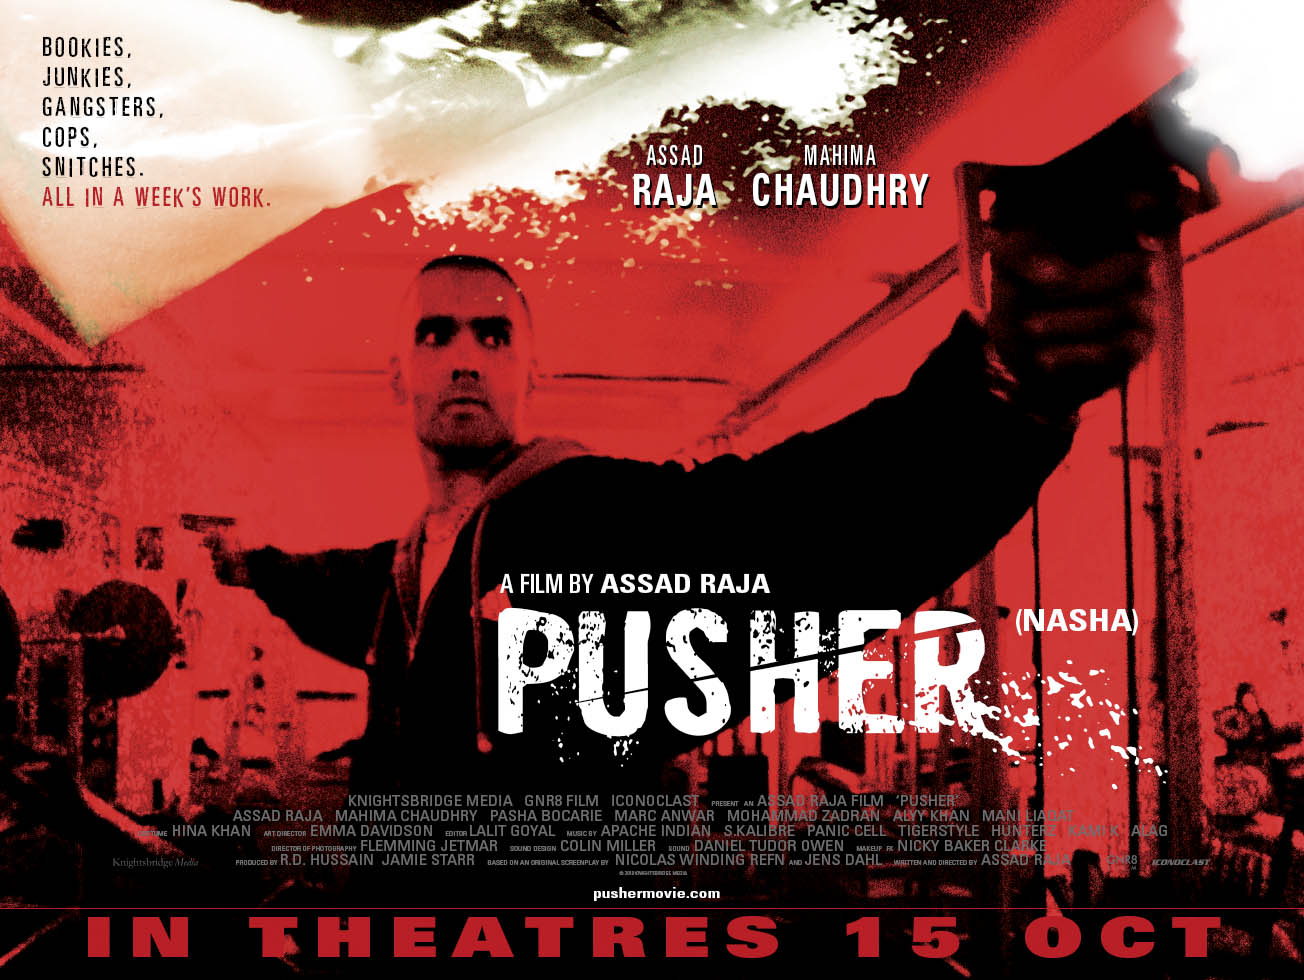 Pusher Movie Cinema Poster.